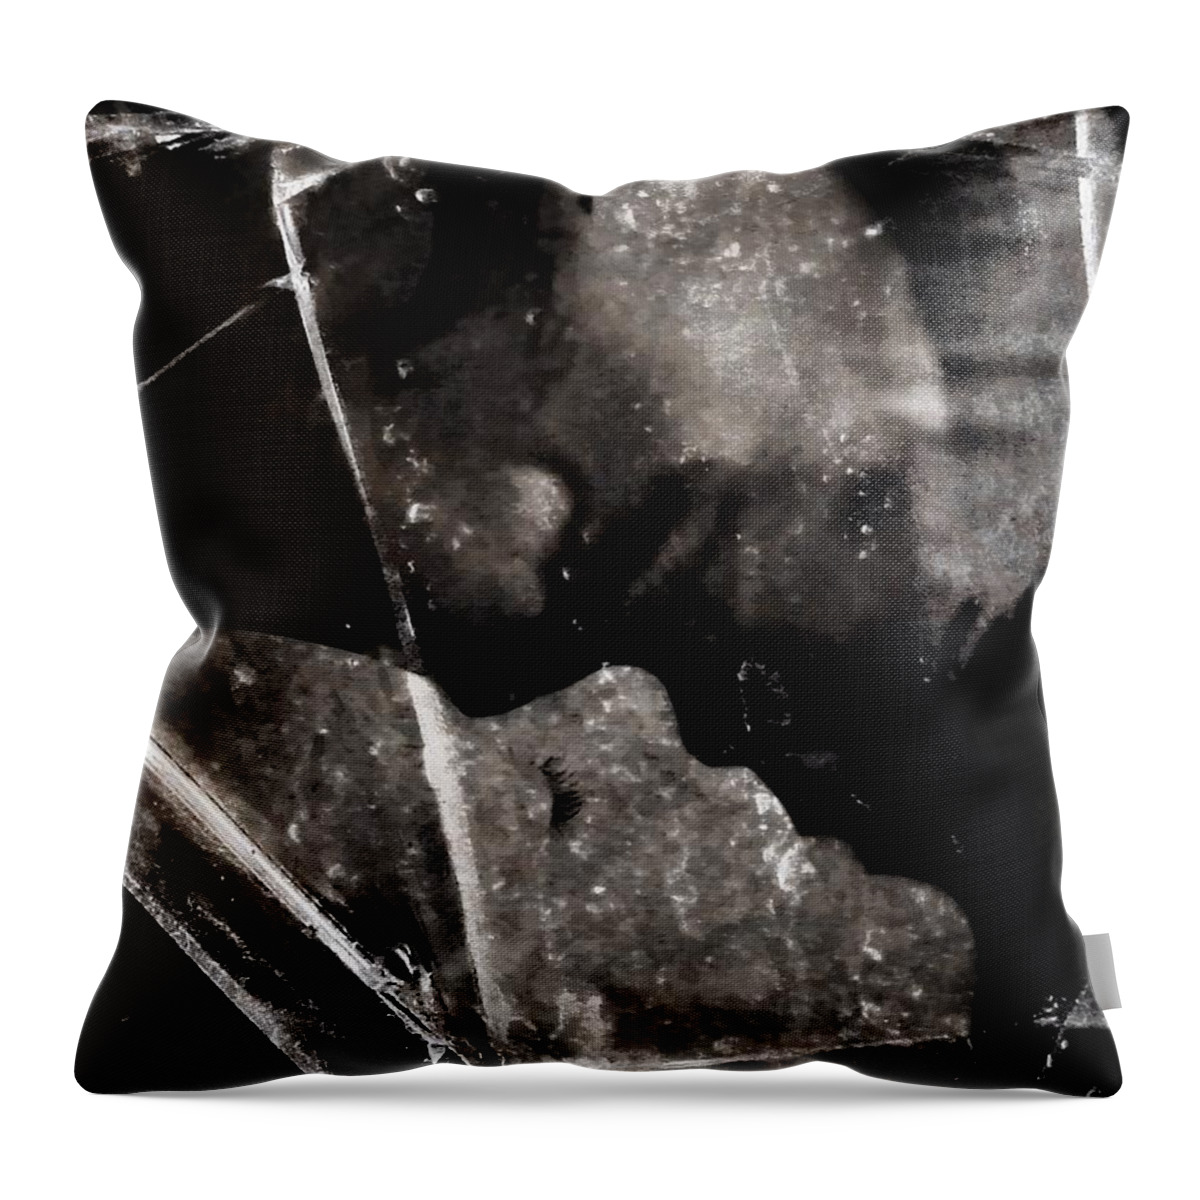 Man Throw Pillow featuring the digital art Once we had a dream by Gun Legler